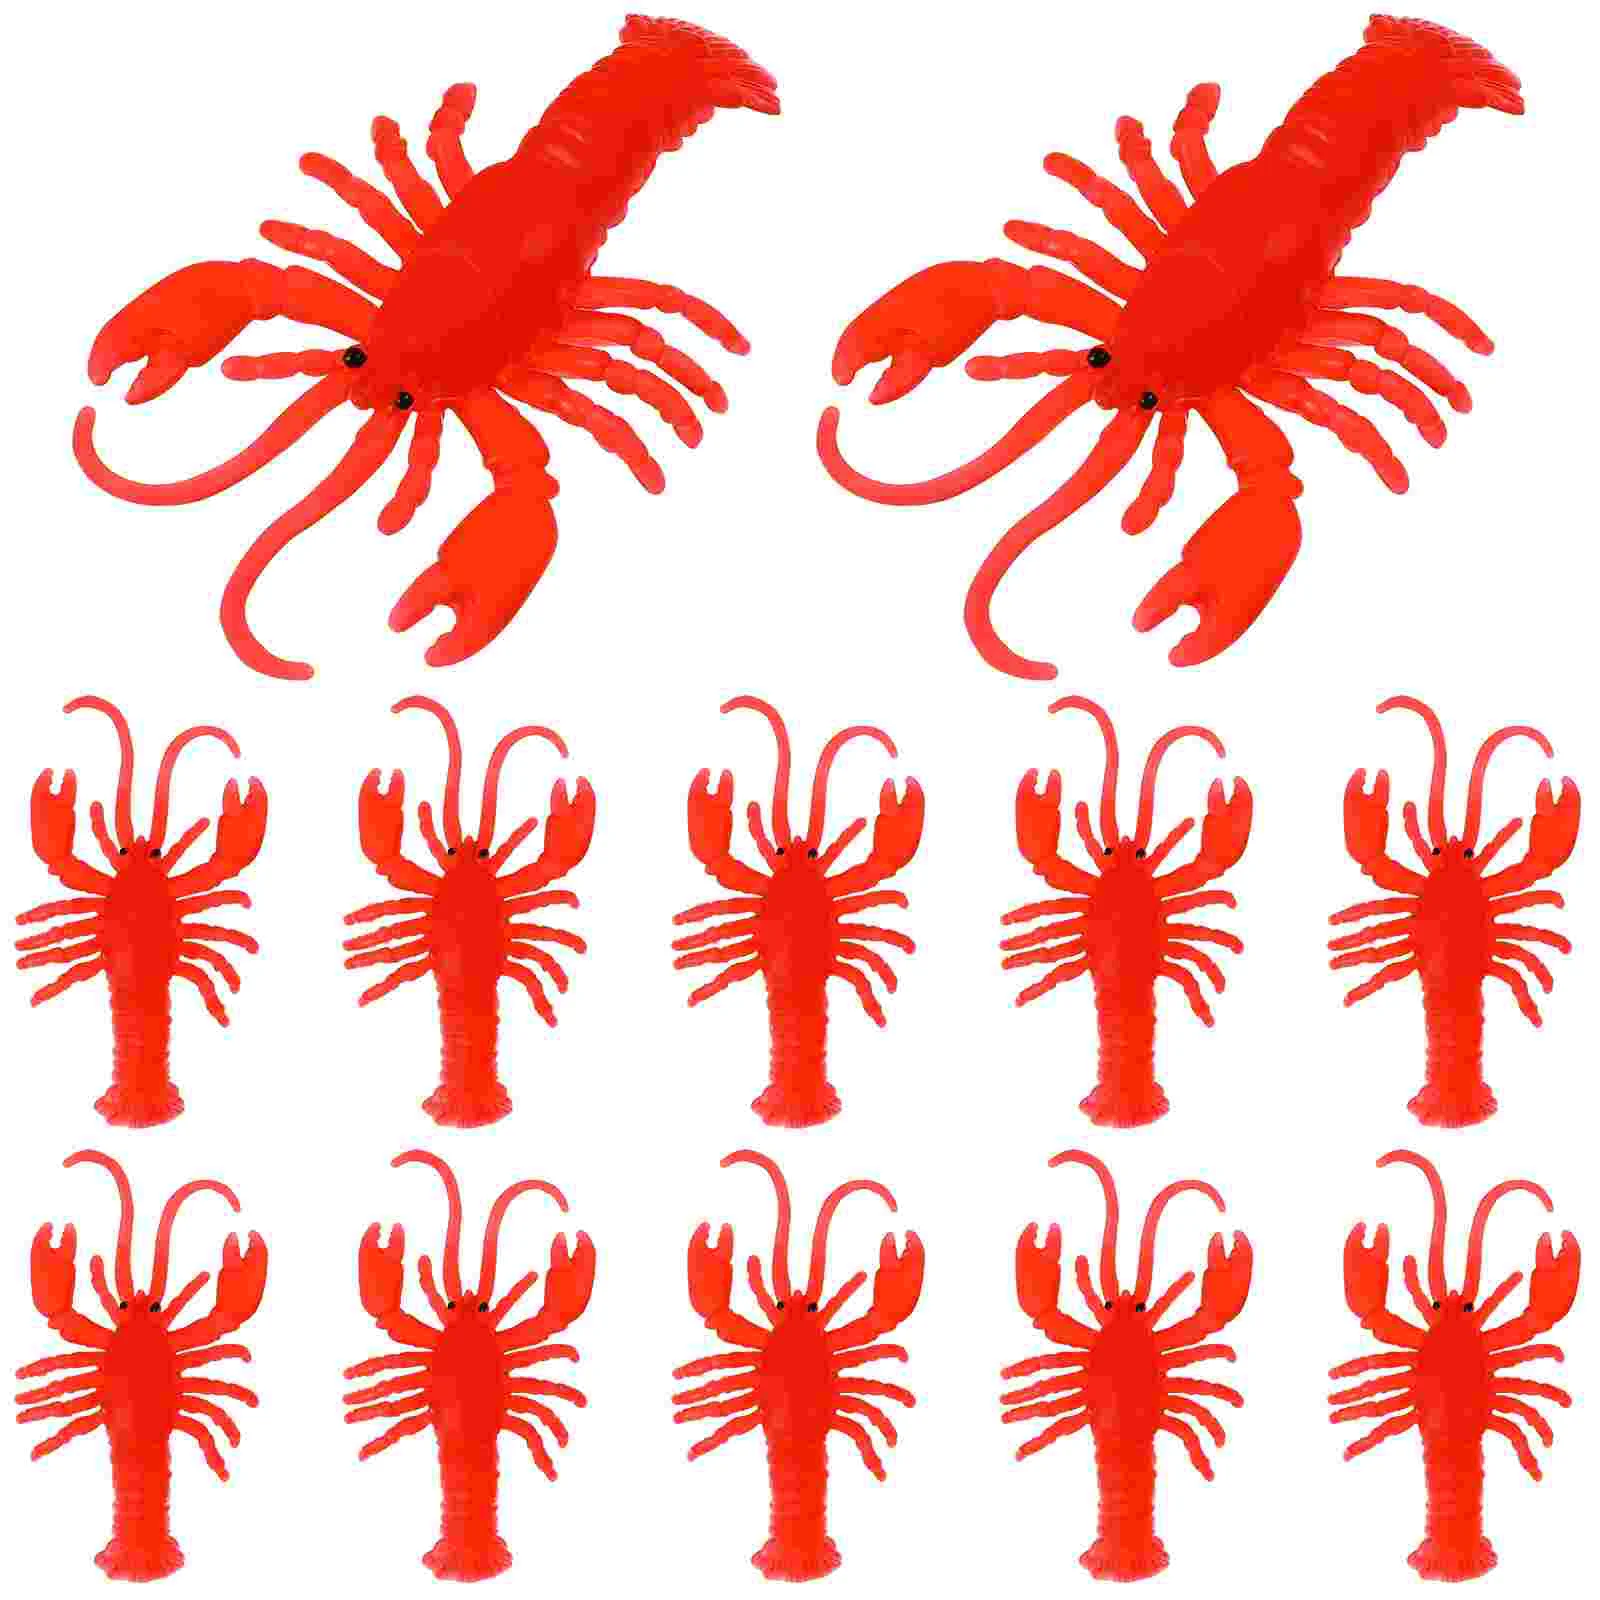 

12 Pcs Children's Toys Simulated Crayfish Fake Crawfish Marine Animal Lobster 5.5X4X1.5CM Rubber Sea Creature Models Ornaments